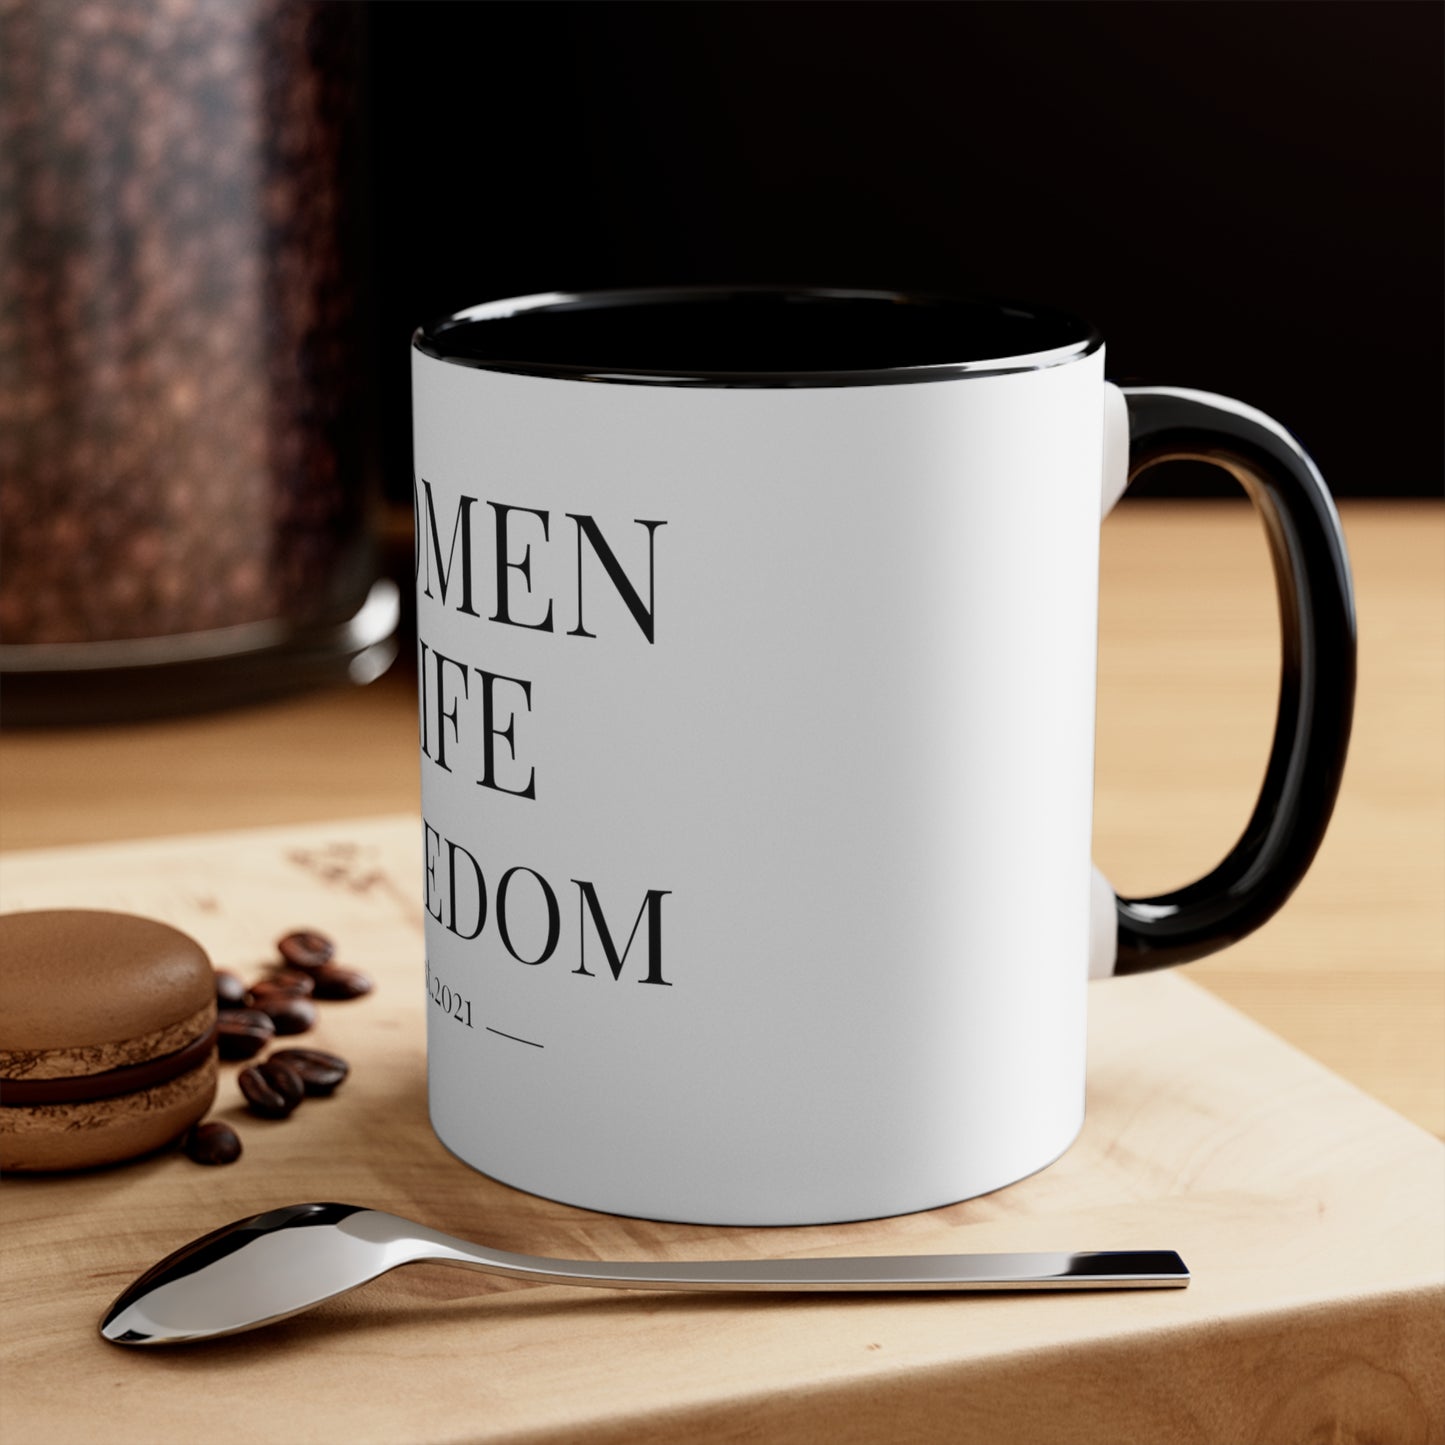 Women Life Freedom Red - Accent Coffee Mug, 11oz